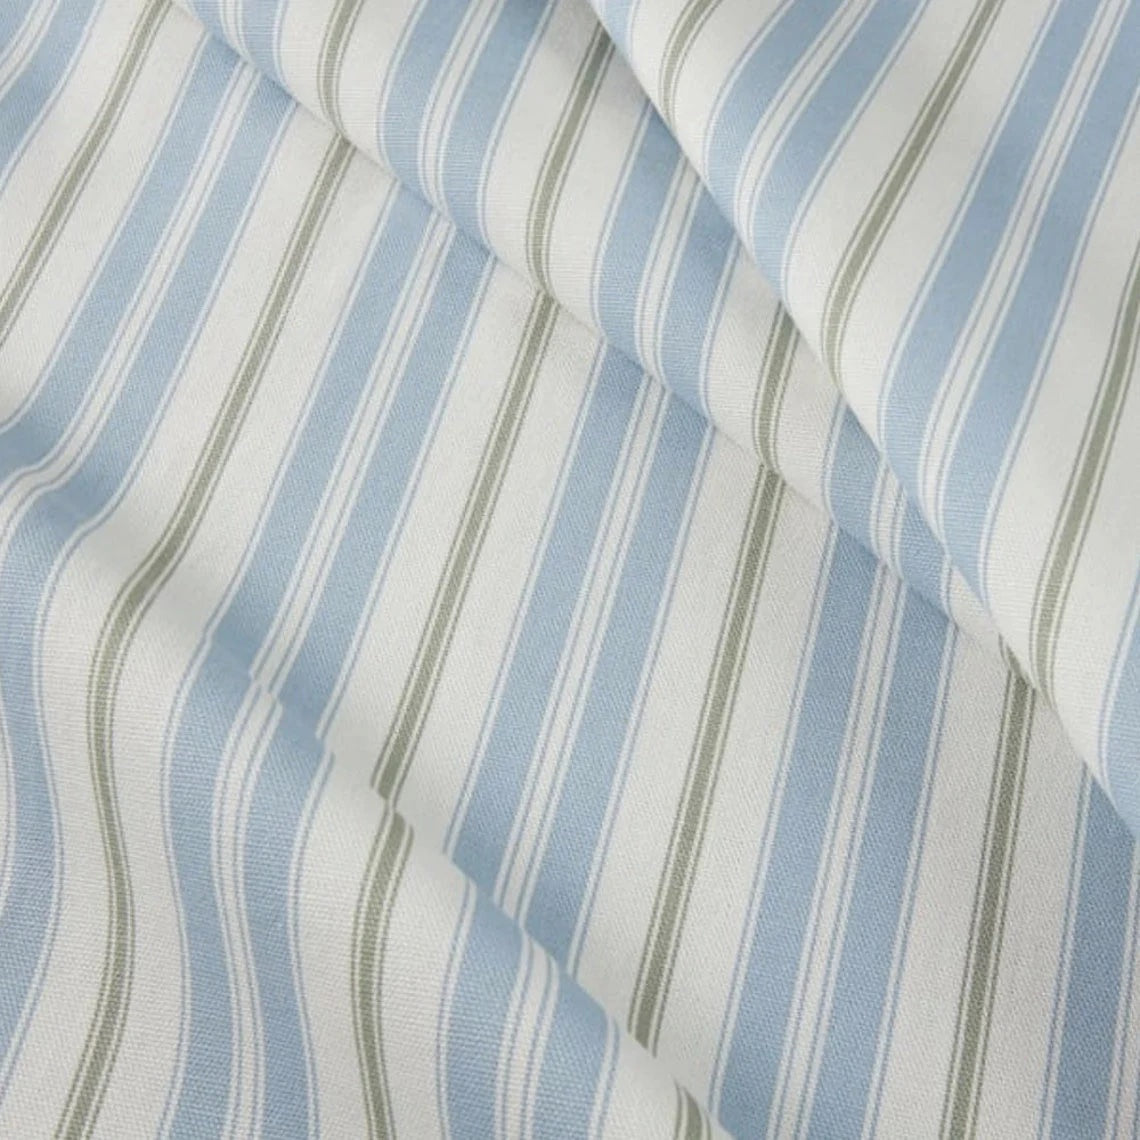 rod pocket curtain panels pair in newbury antique blue stripe- blue, green, white